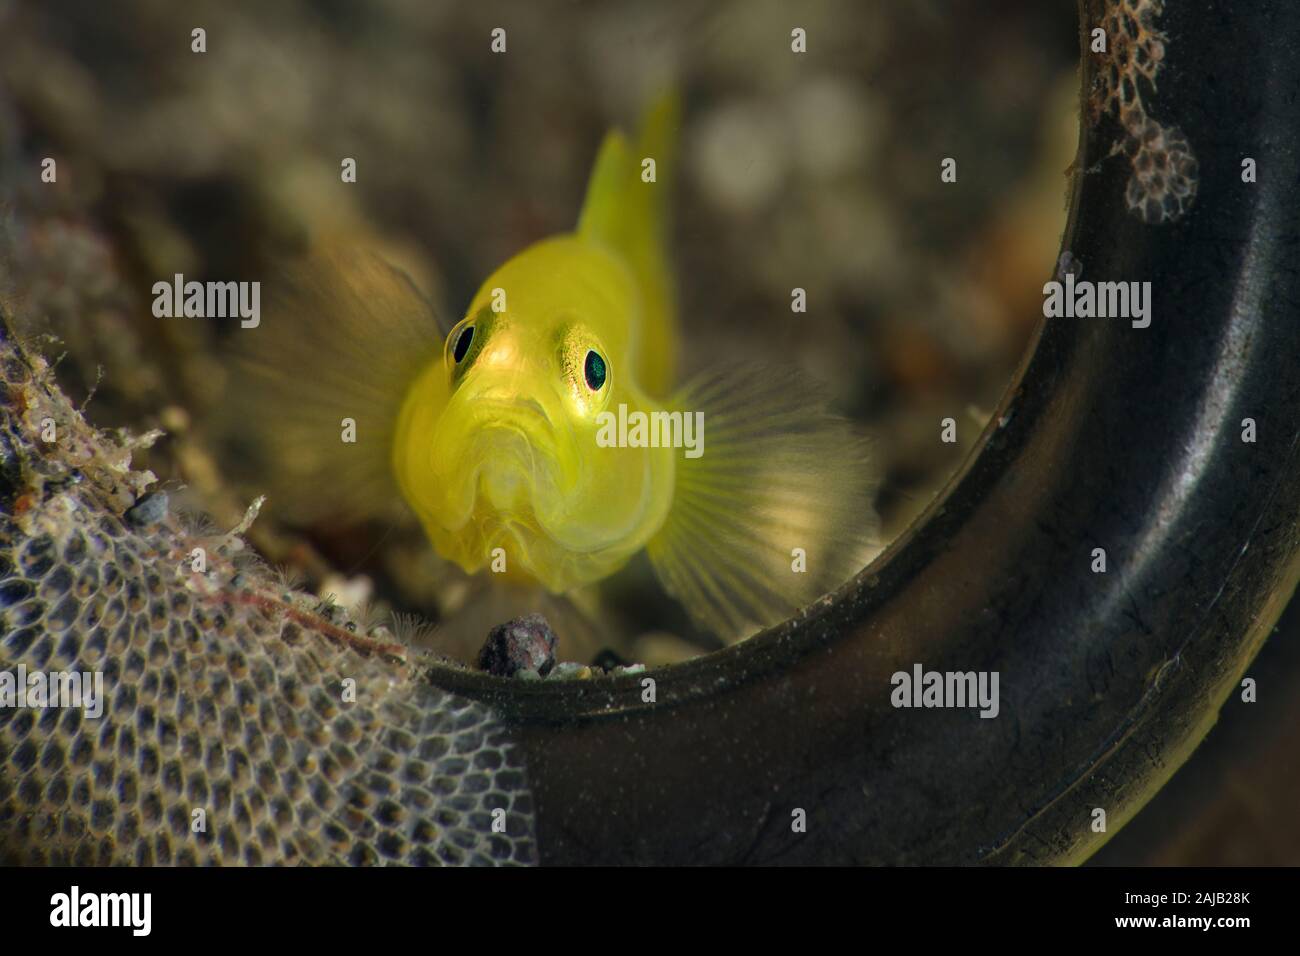 Limone ghiozzi (Lubricogobius exiguus). Subacqueo fotografia macro da Anilao, Filippine Foto Stock